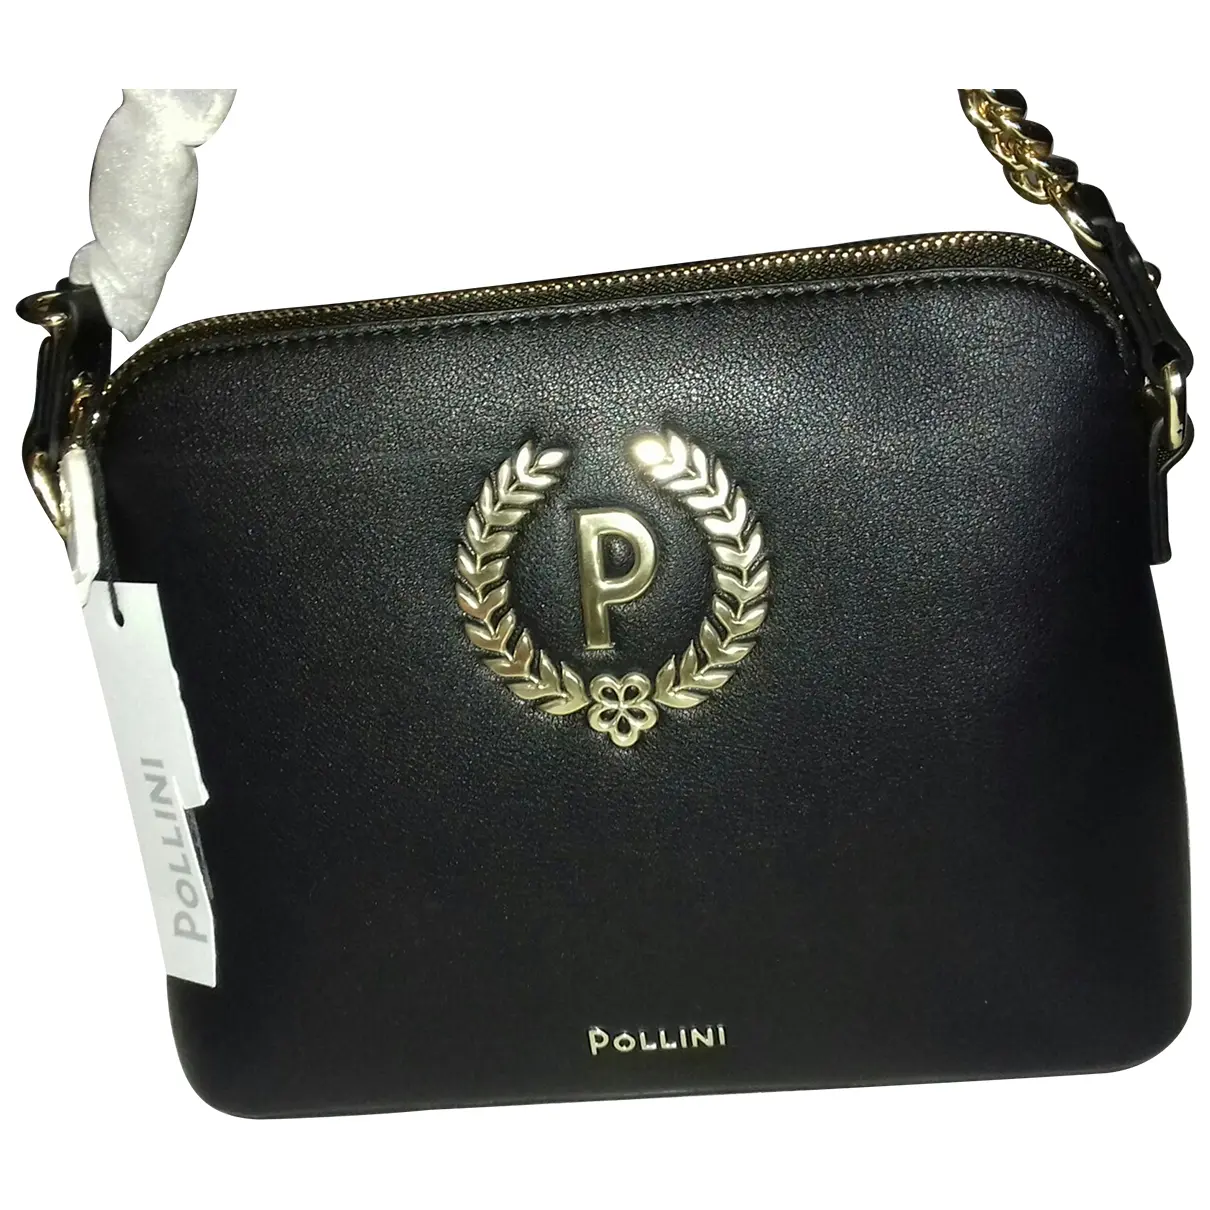 Leather crossbody bag Pollini